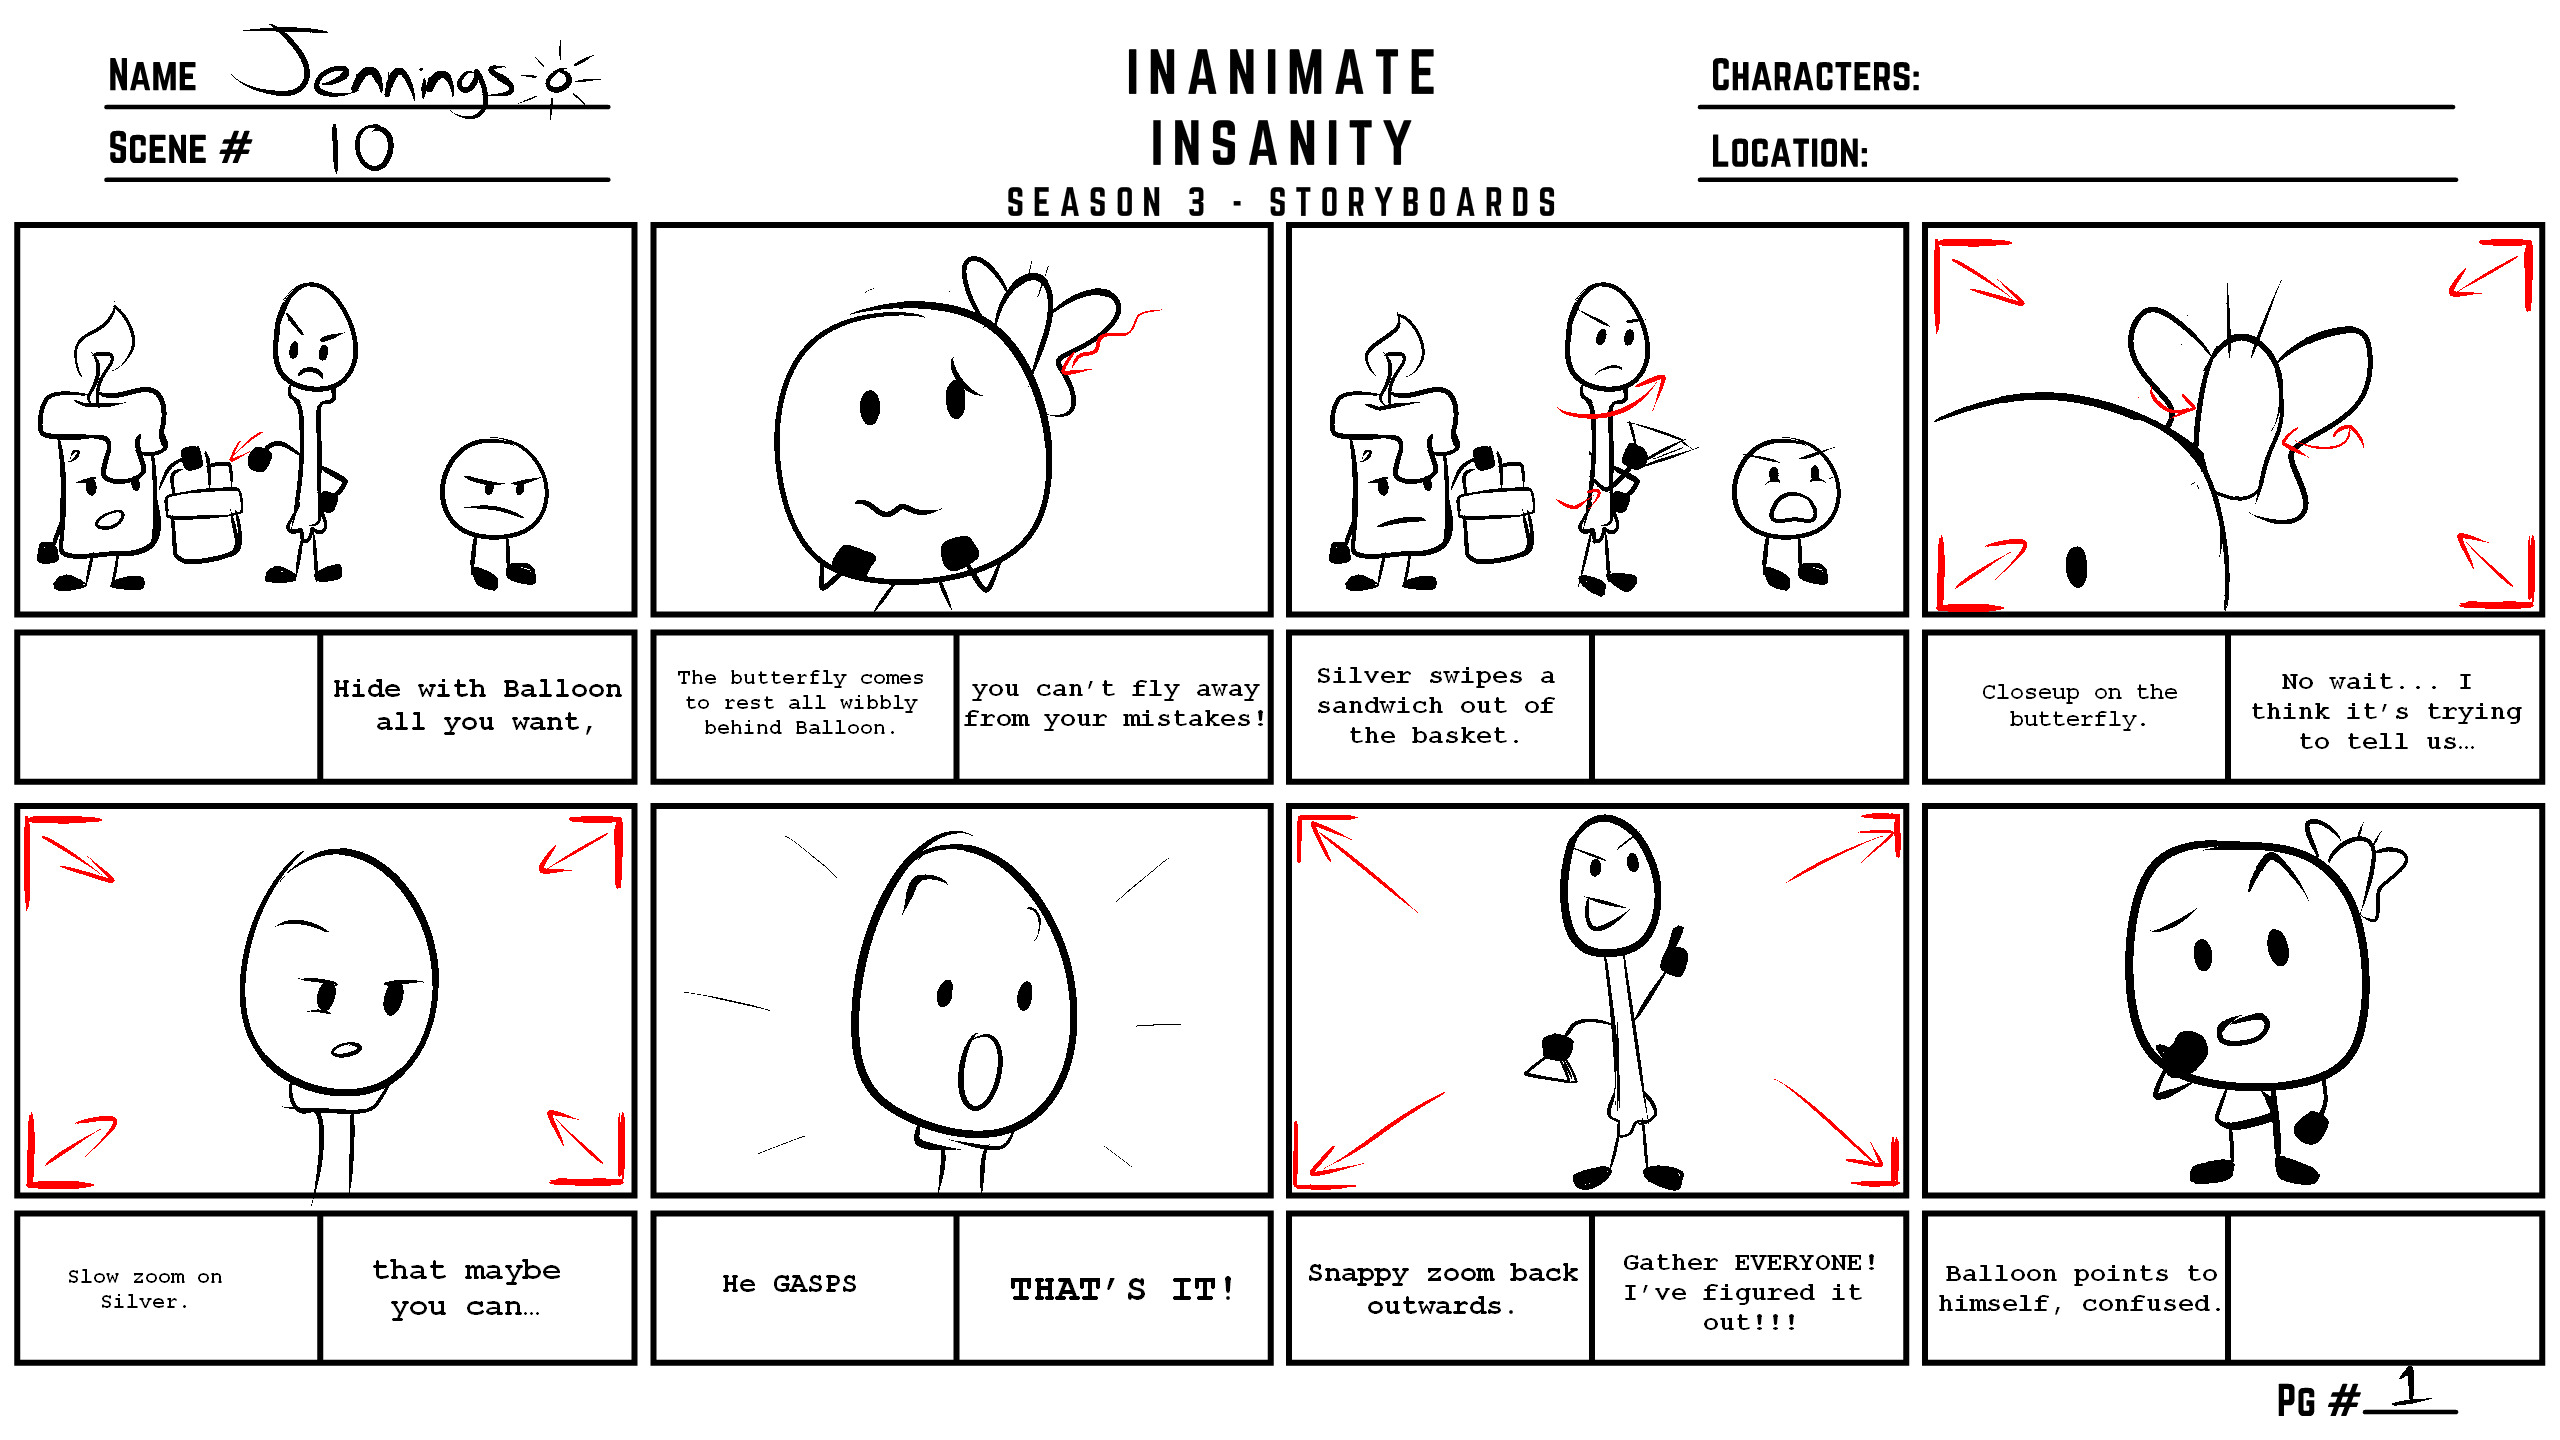 Inanimate Insanity Scene 10-1